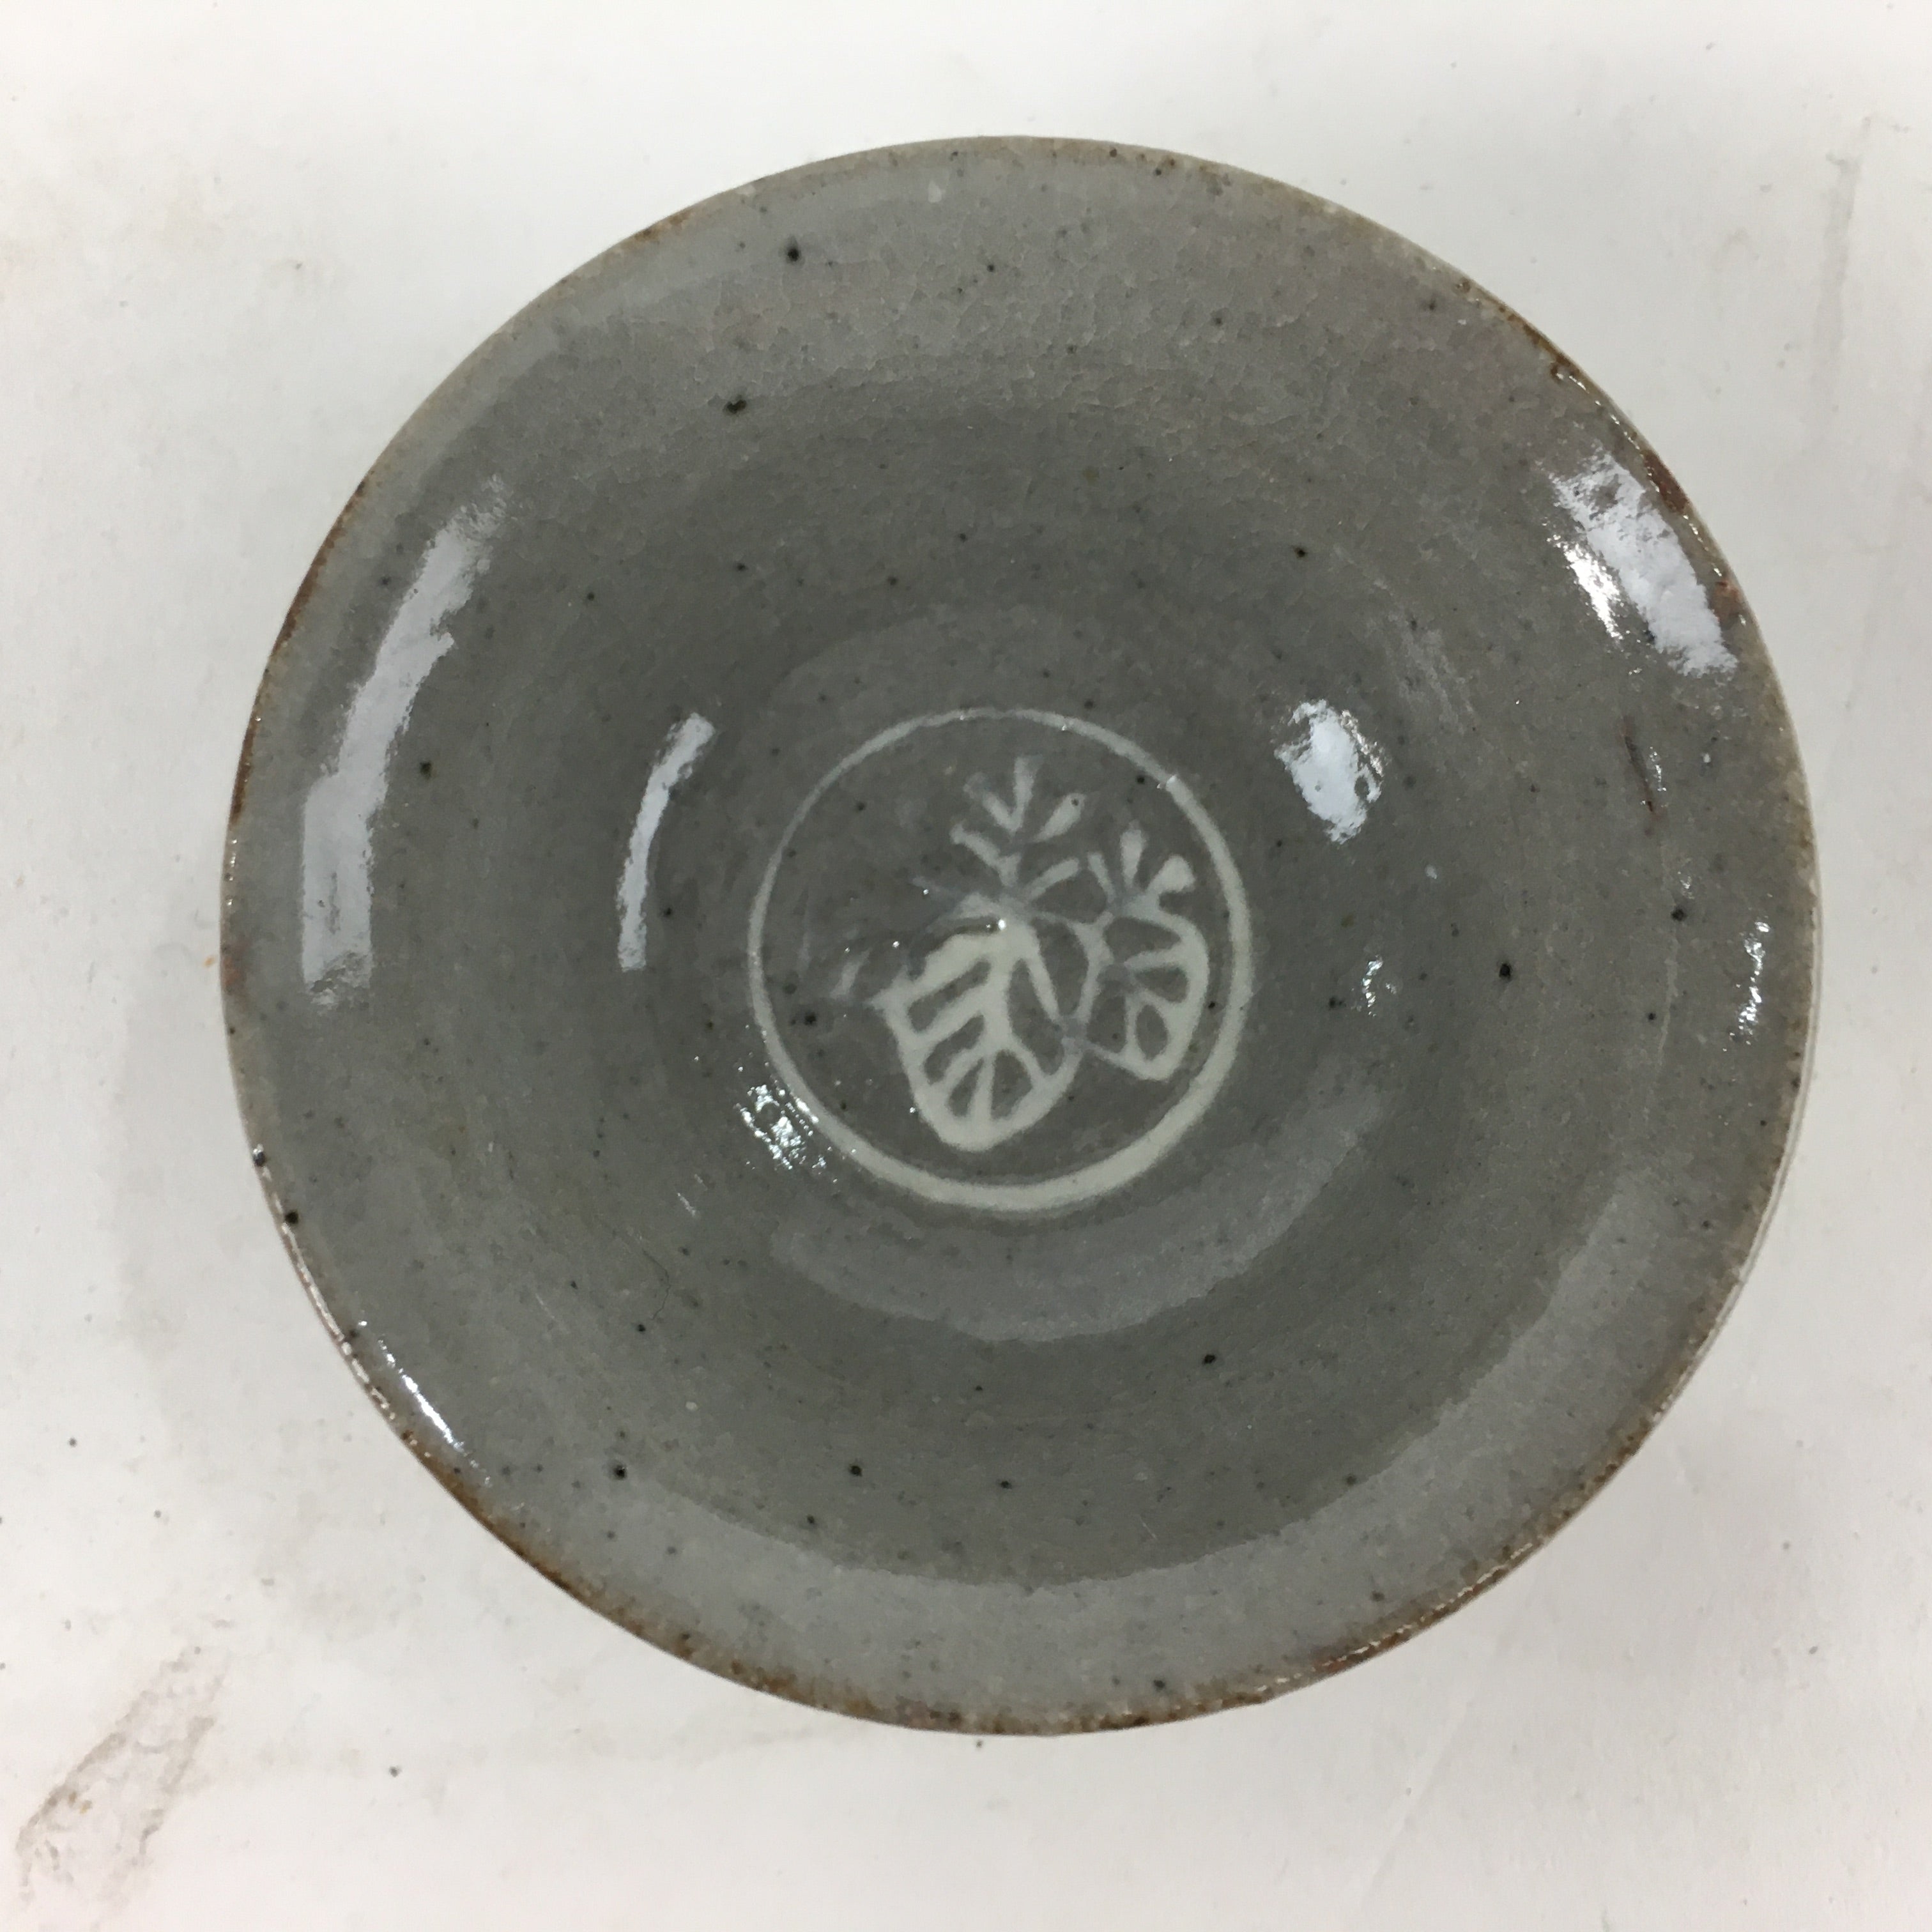 Japanese Ceramic Sake Cup 3pc Set Vtg Boxed Pottery Sakazuki Guinomi PX580